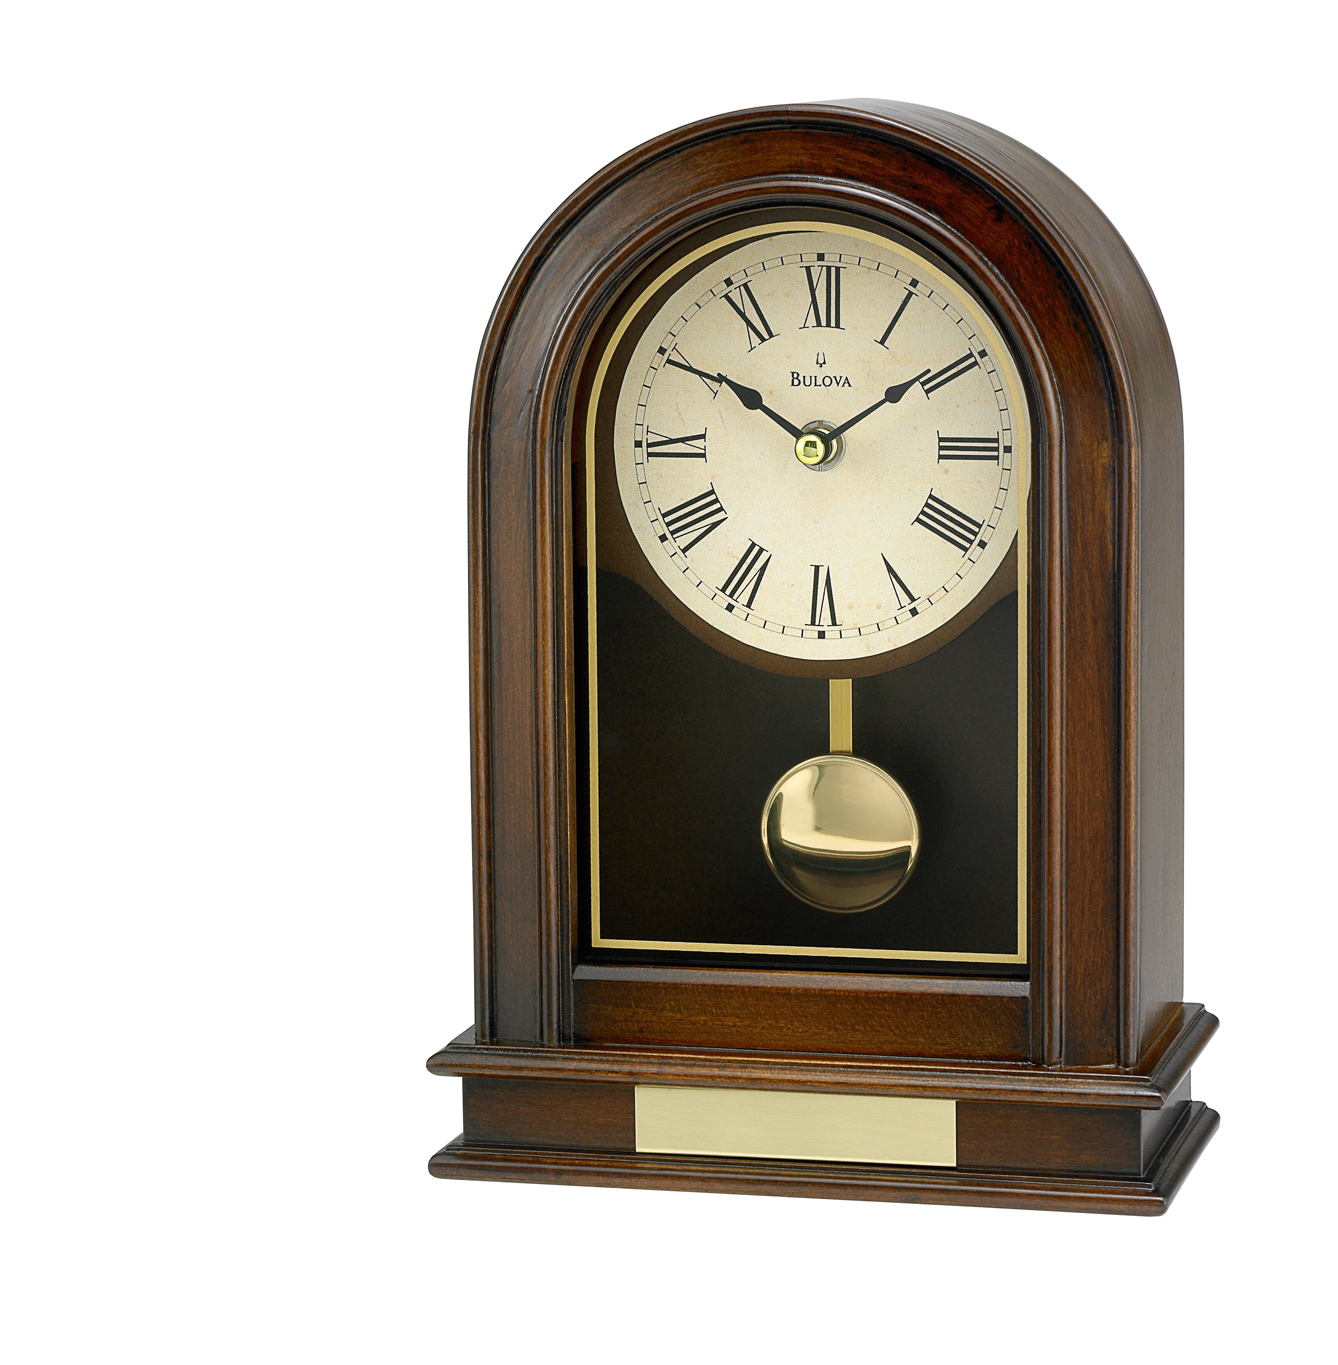 Hardwick Bulova Clock